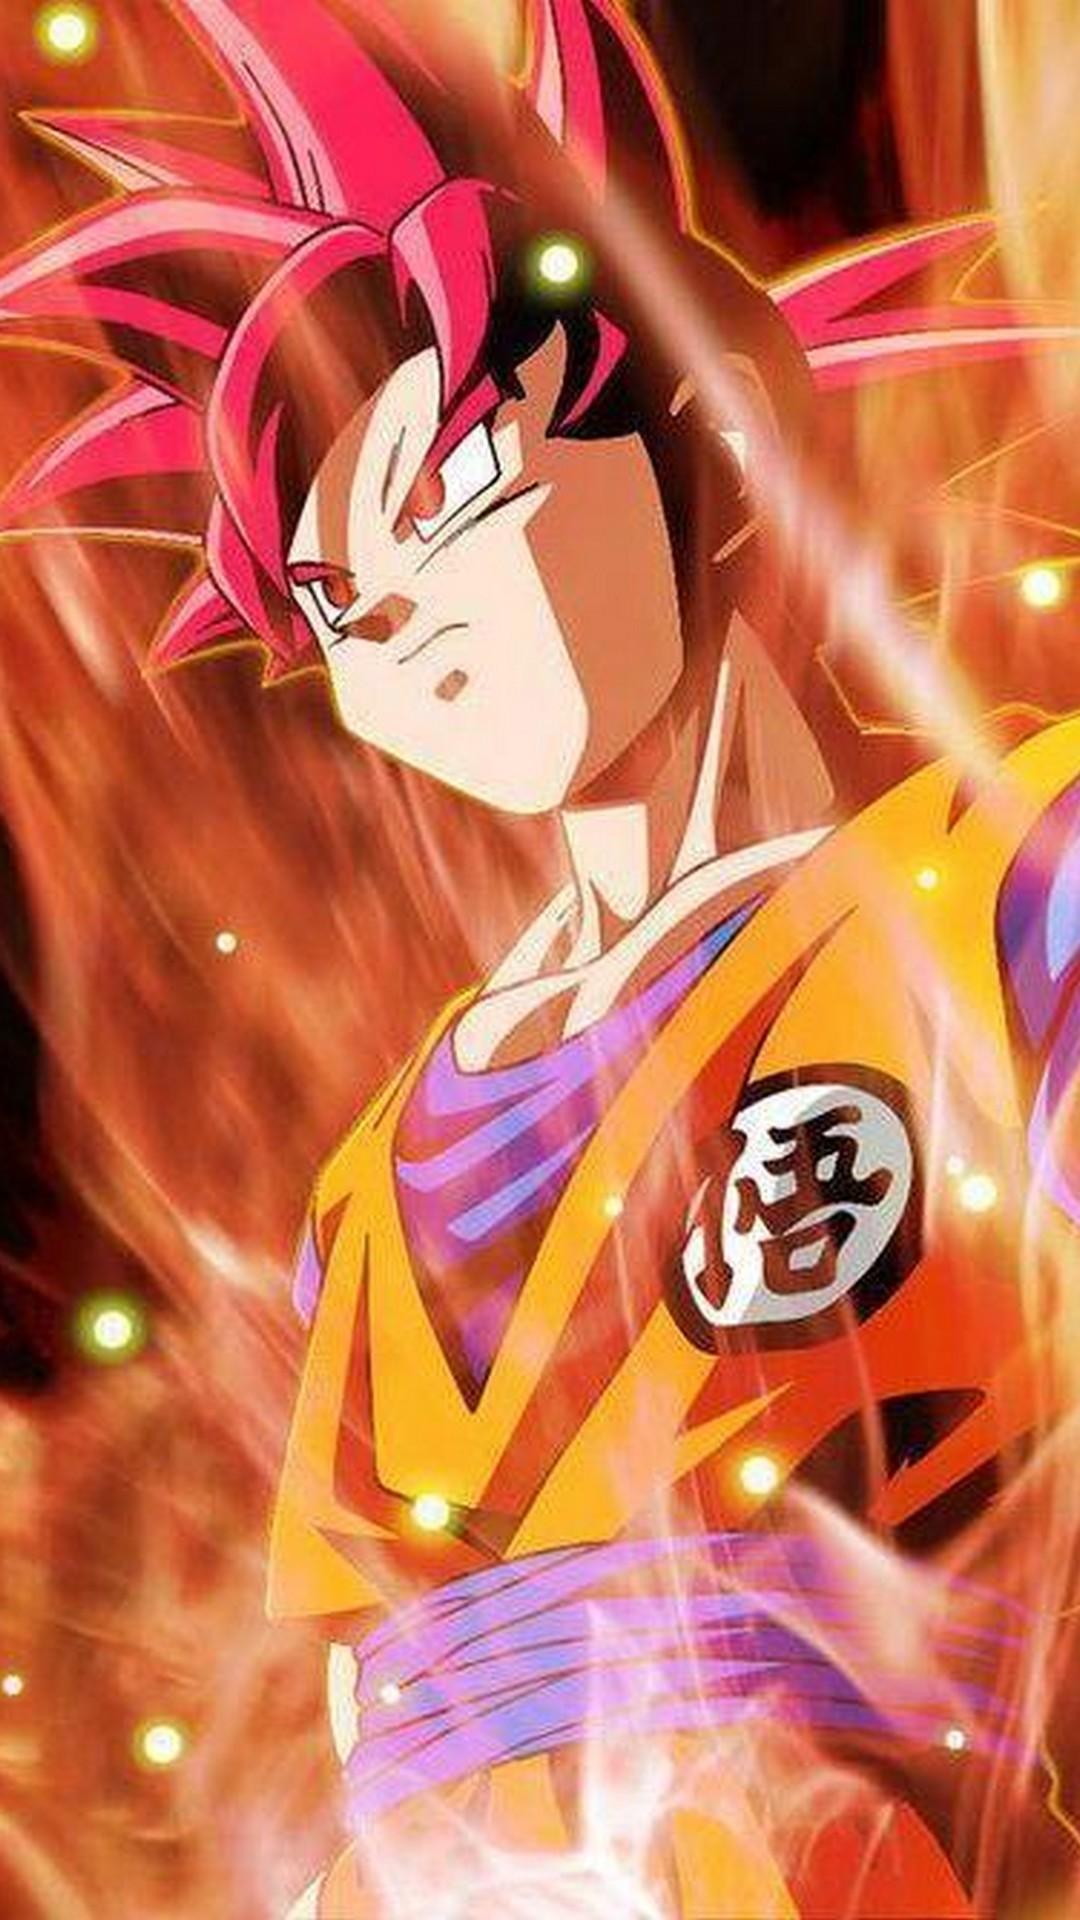 Wallpaper Goku Super Saiyan God Android Wallpaper